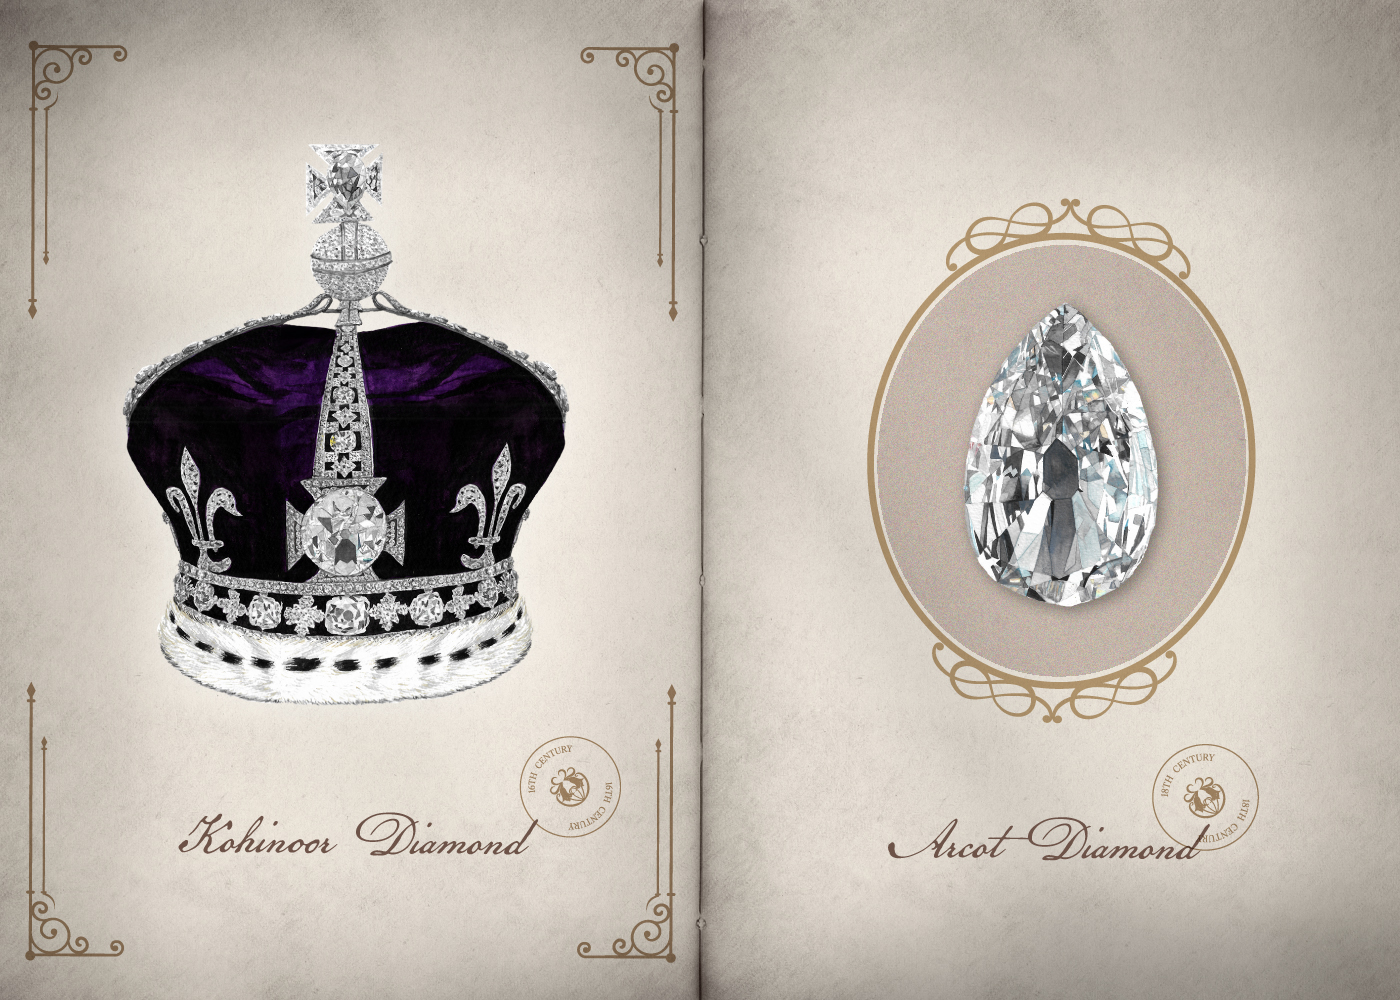 The Kohinoor Diamond and arcot diamond